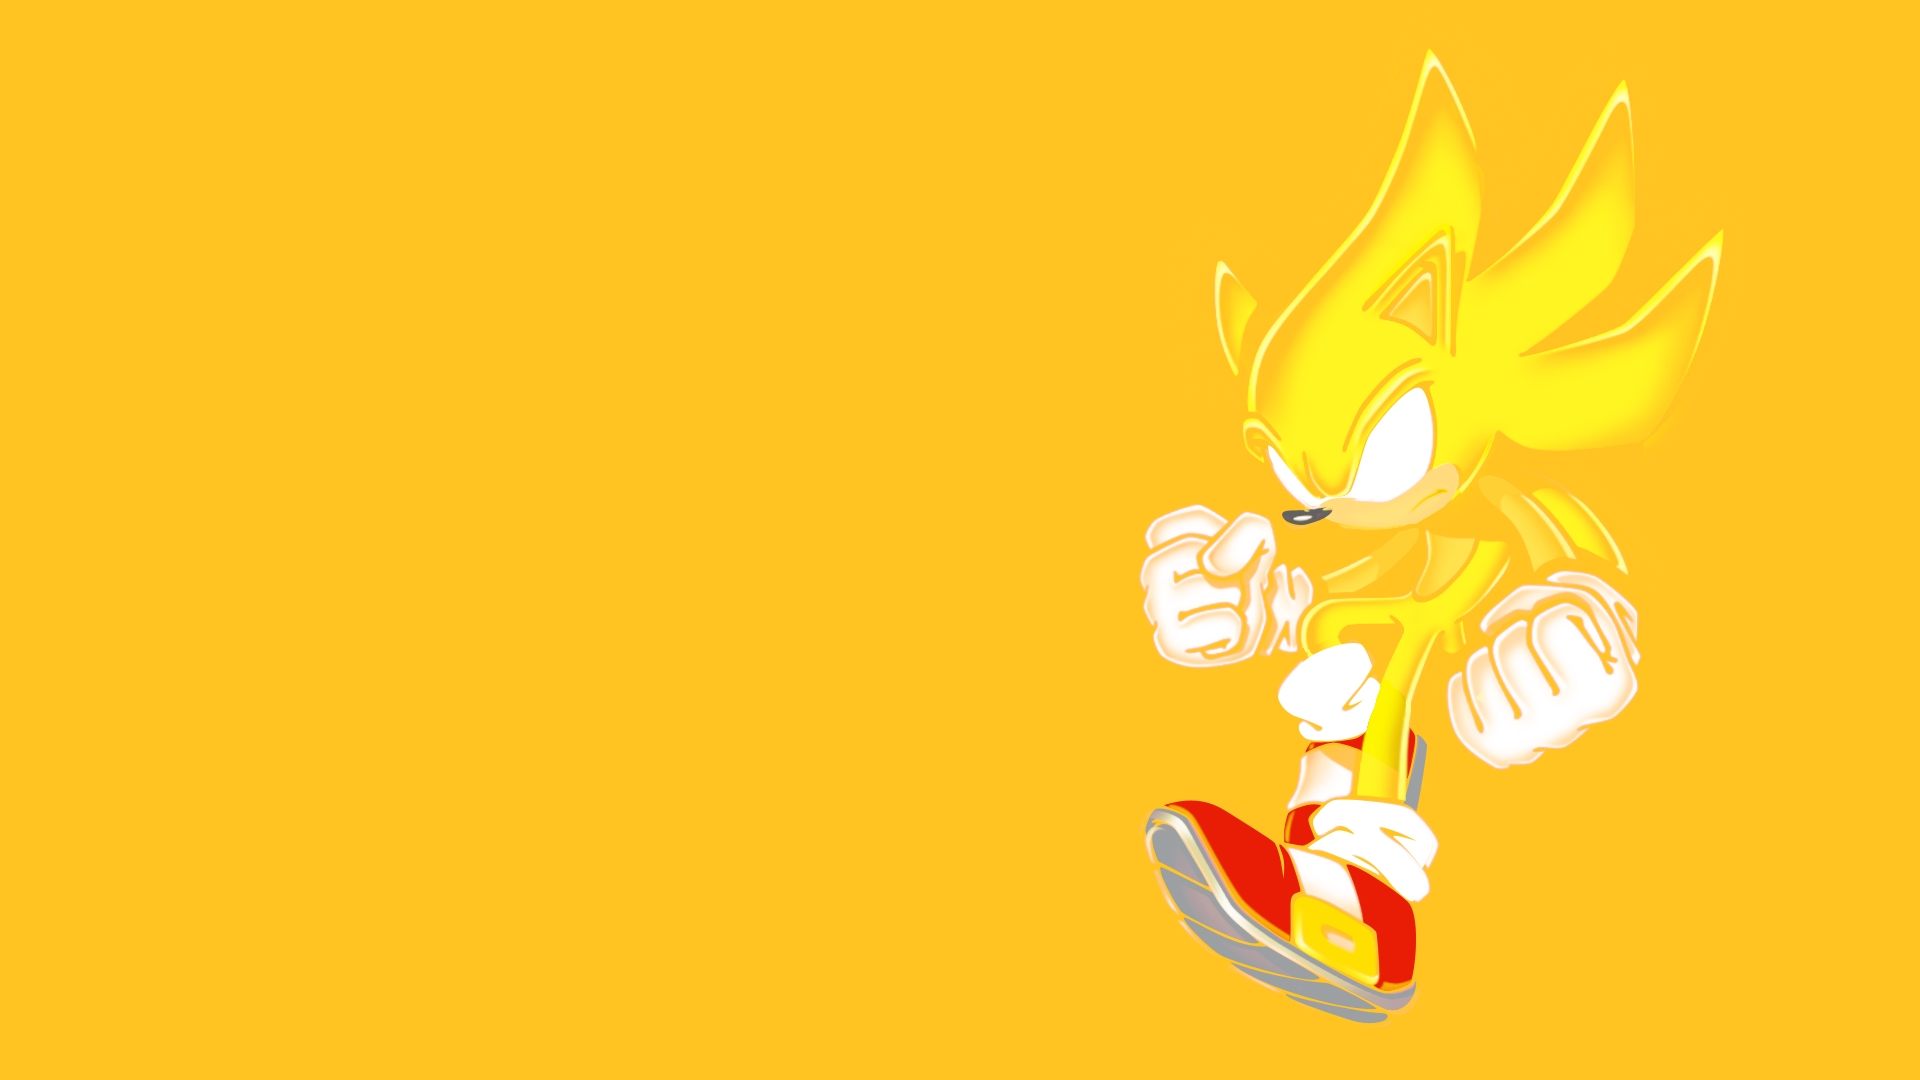 Sonic the Hedgehog iPhone Wallpaper